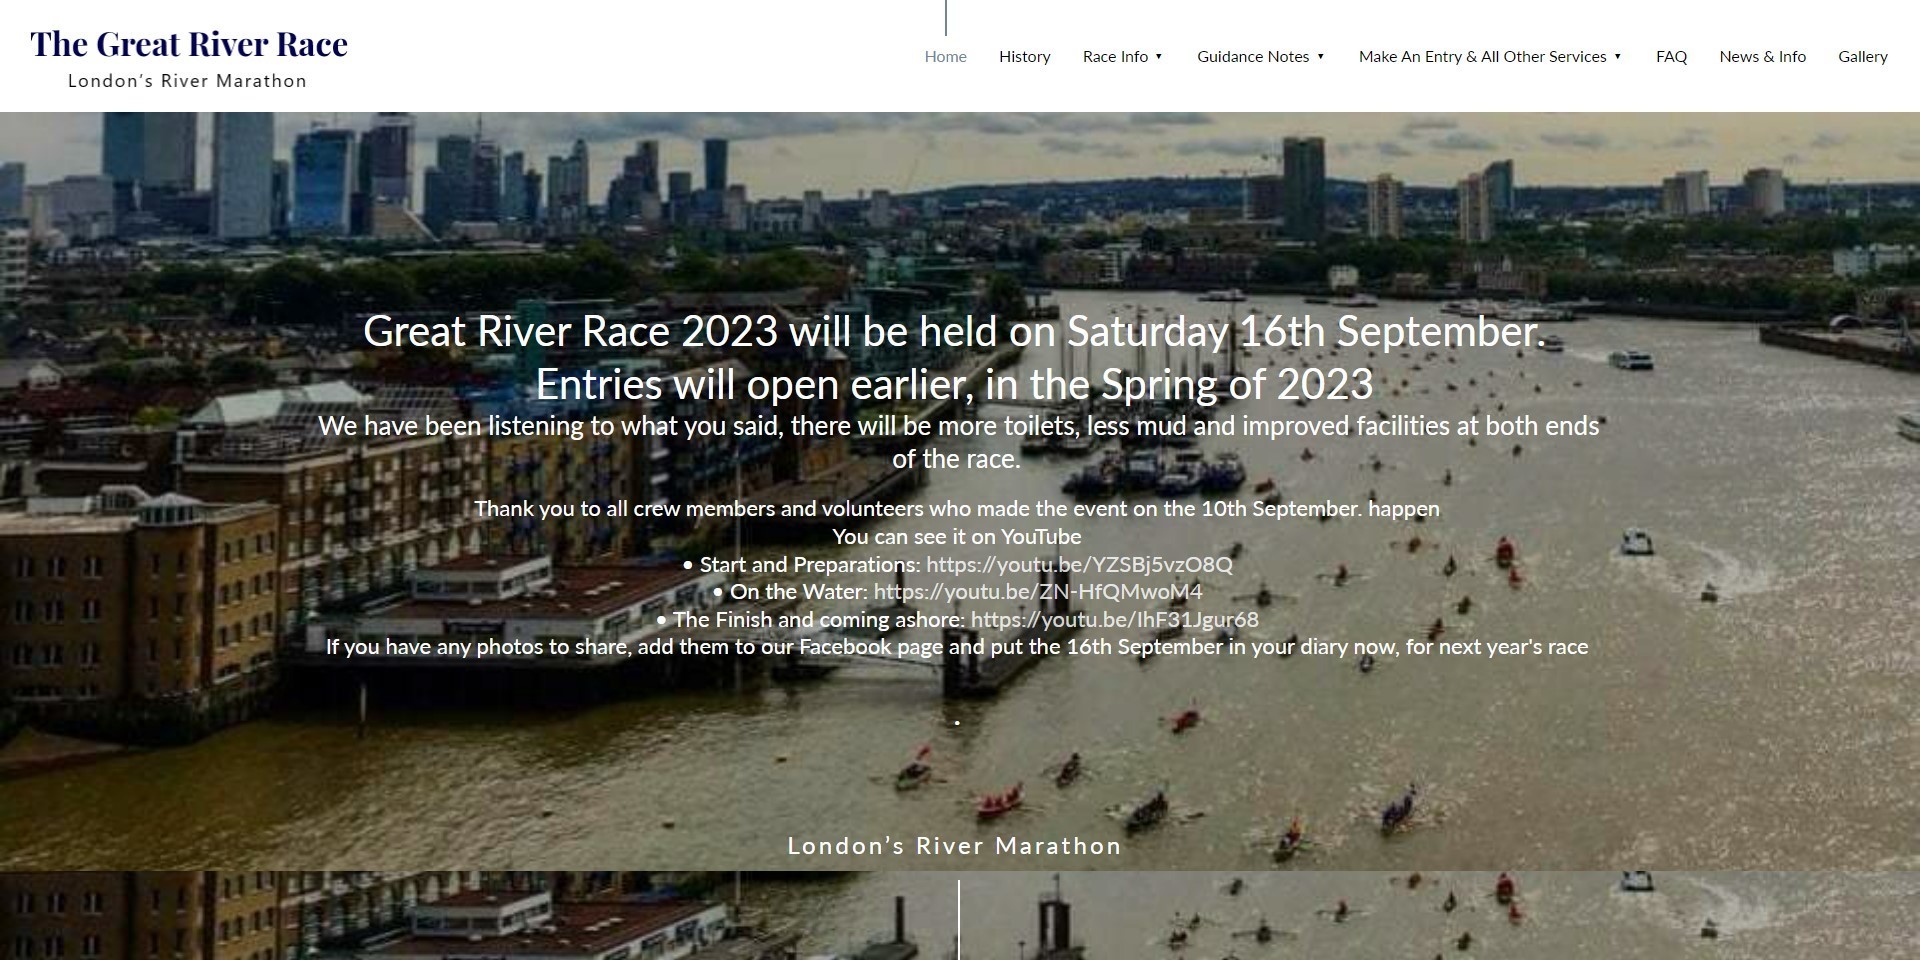 The new Great River Race website, designed by it'seeze shown on desktop